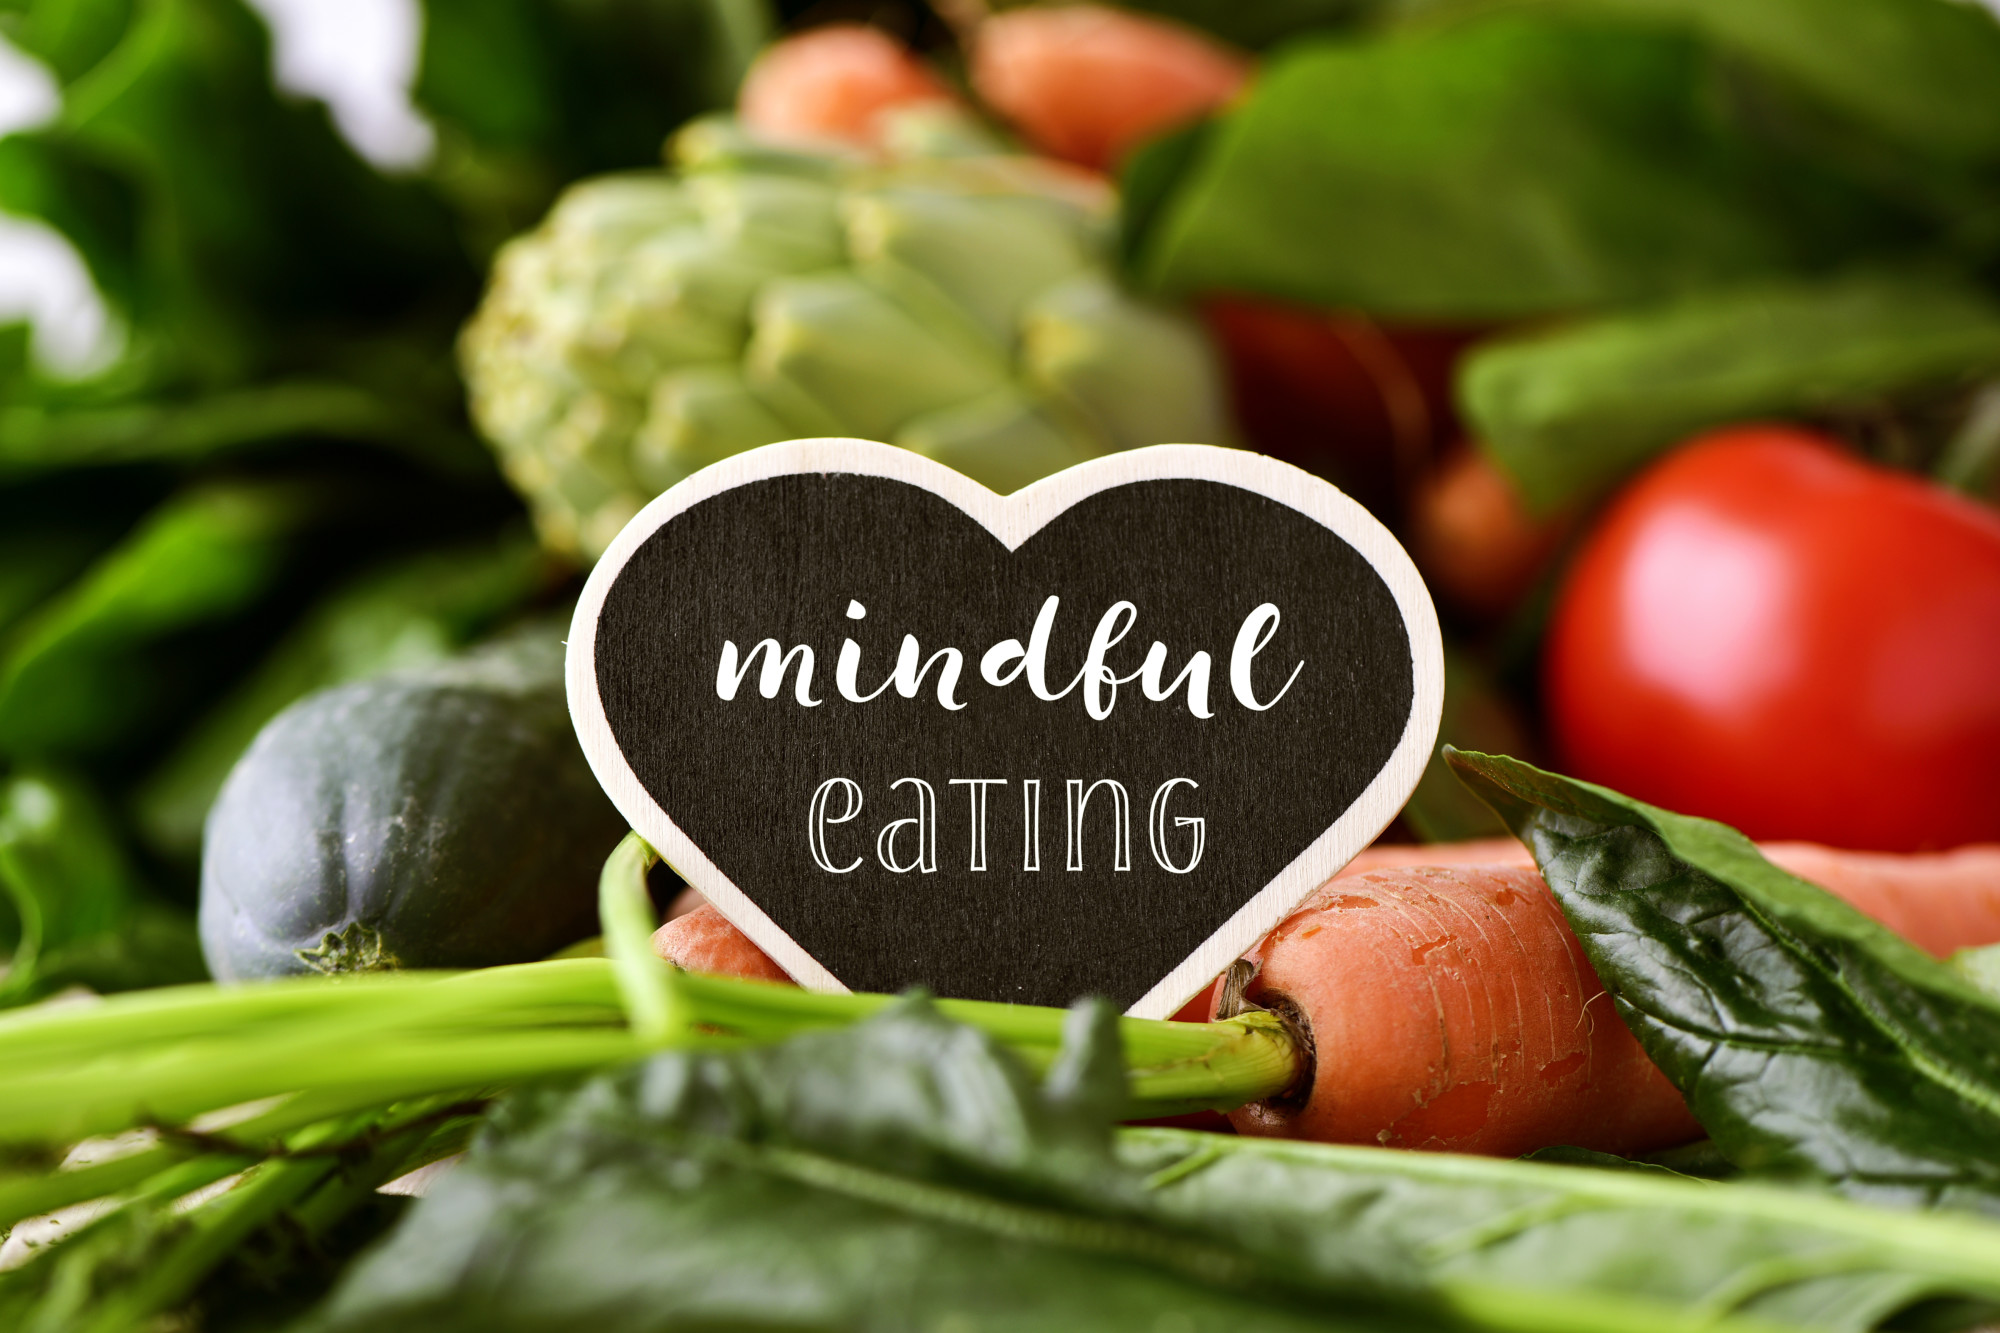 mindful eating sign on food